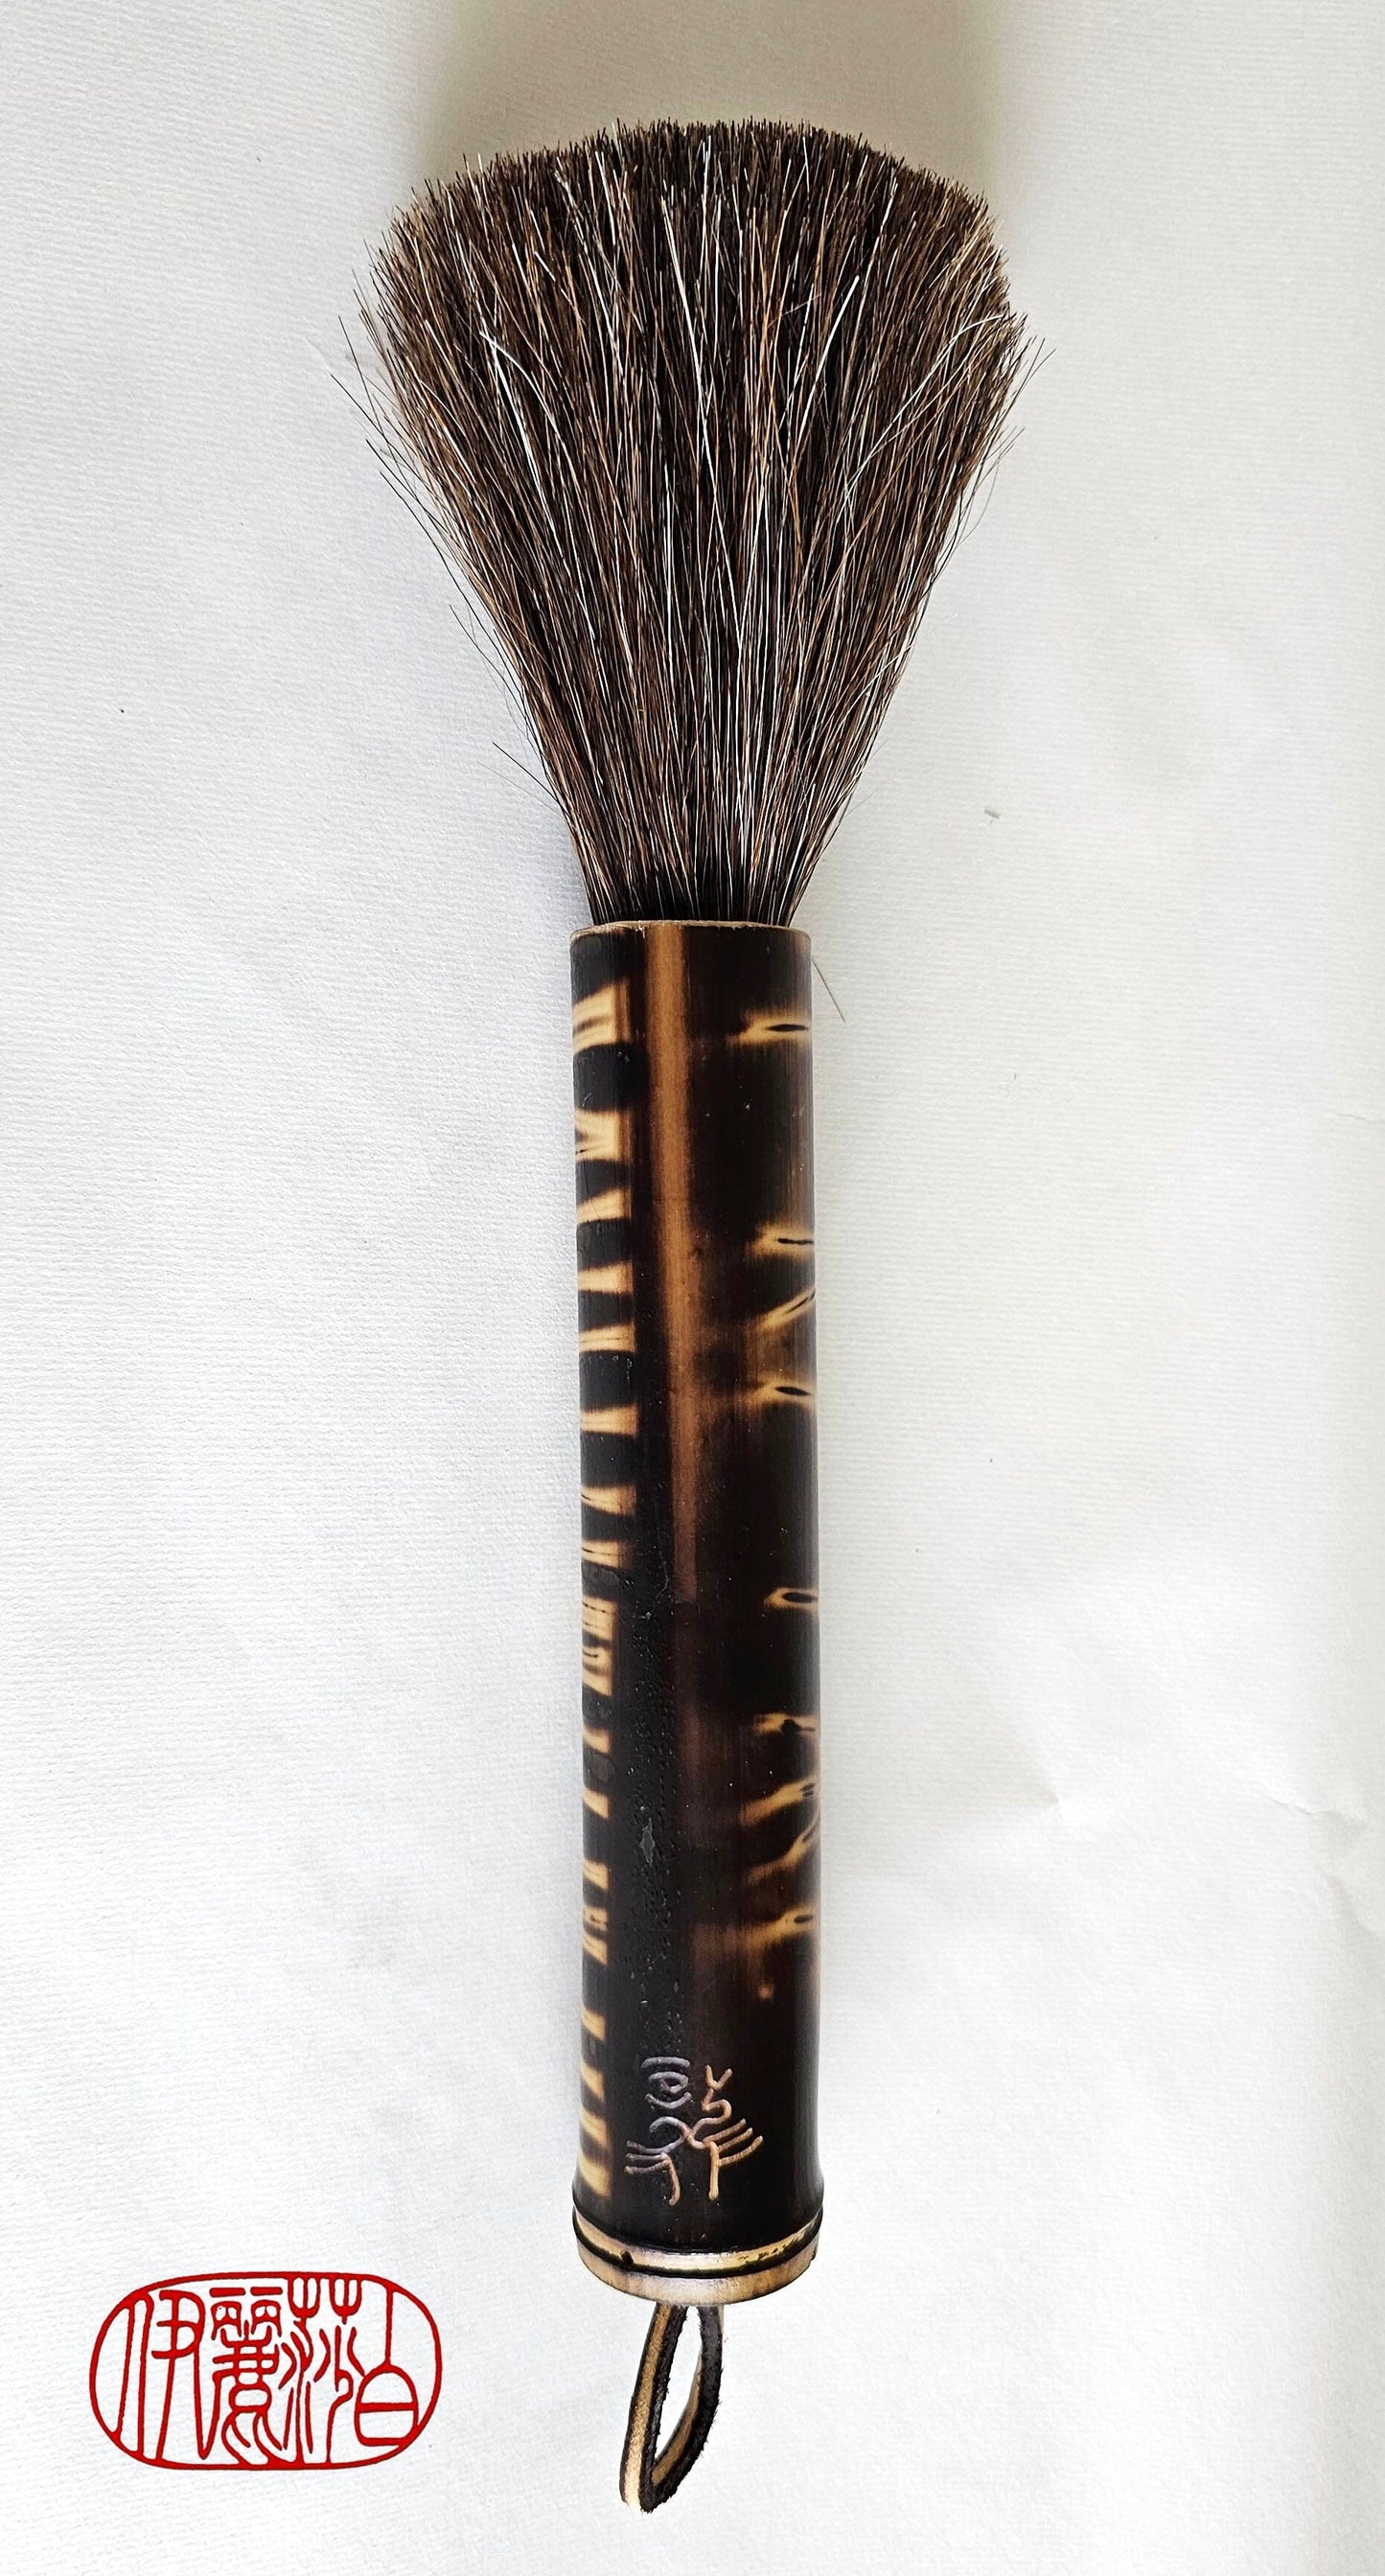 Auburn Horsehair Sumi-e Paintbrush Sumi-e Paint Brush Elizabeth Schowachert Art